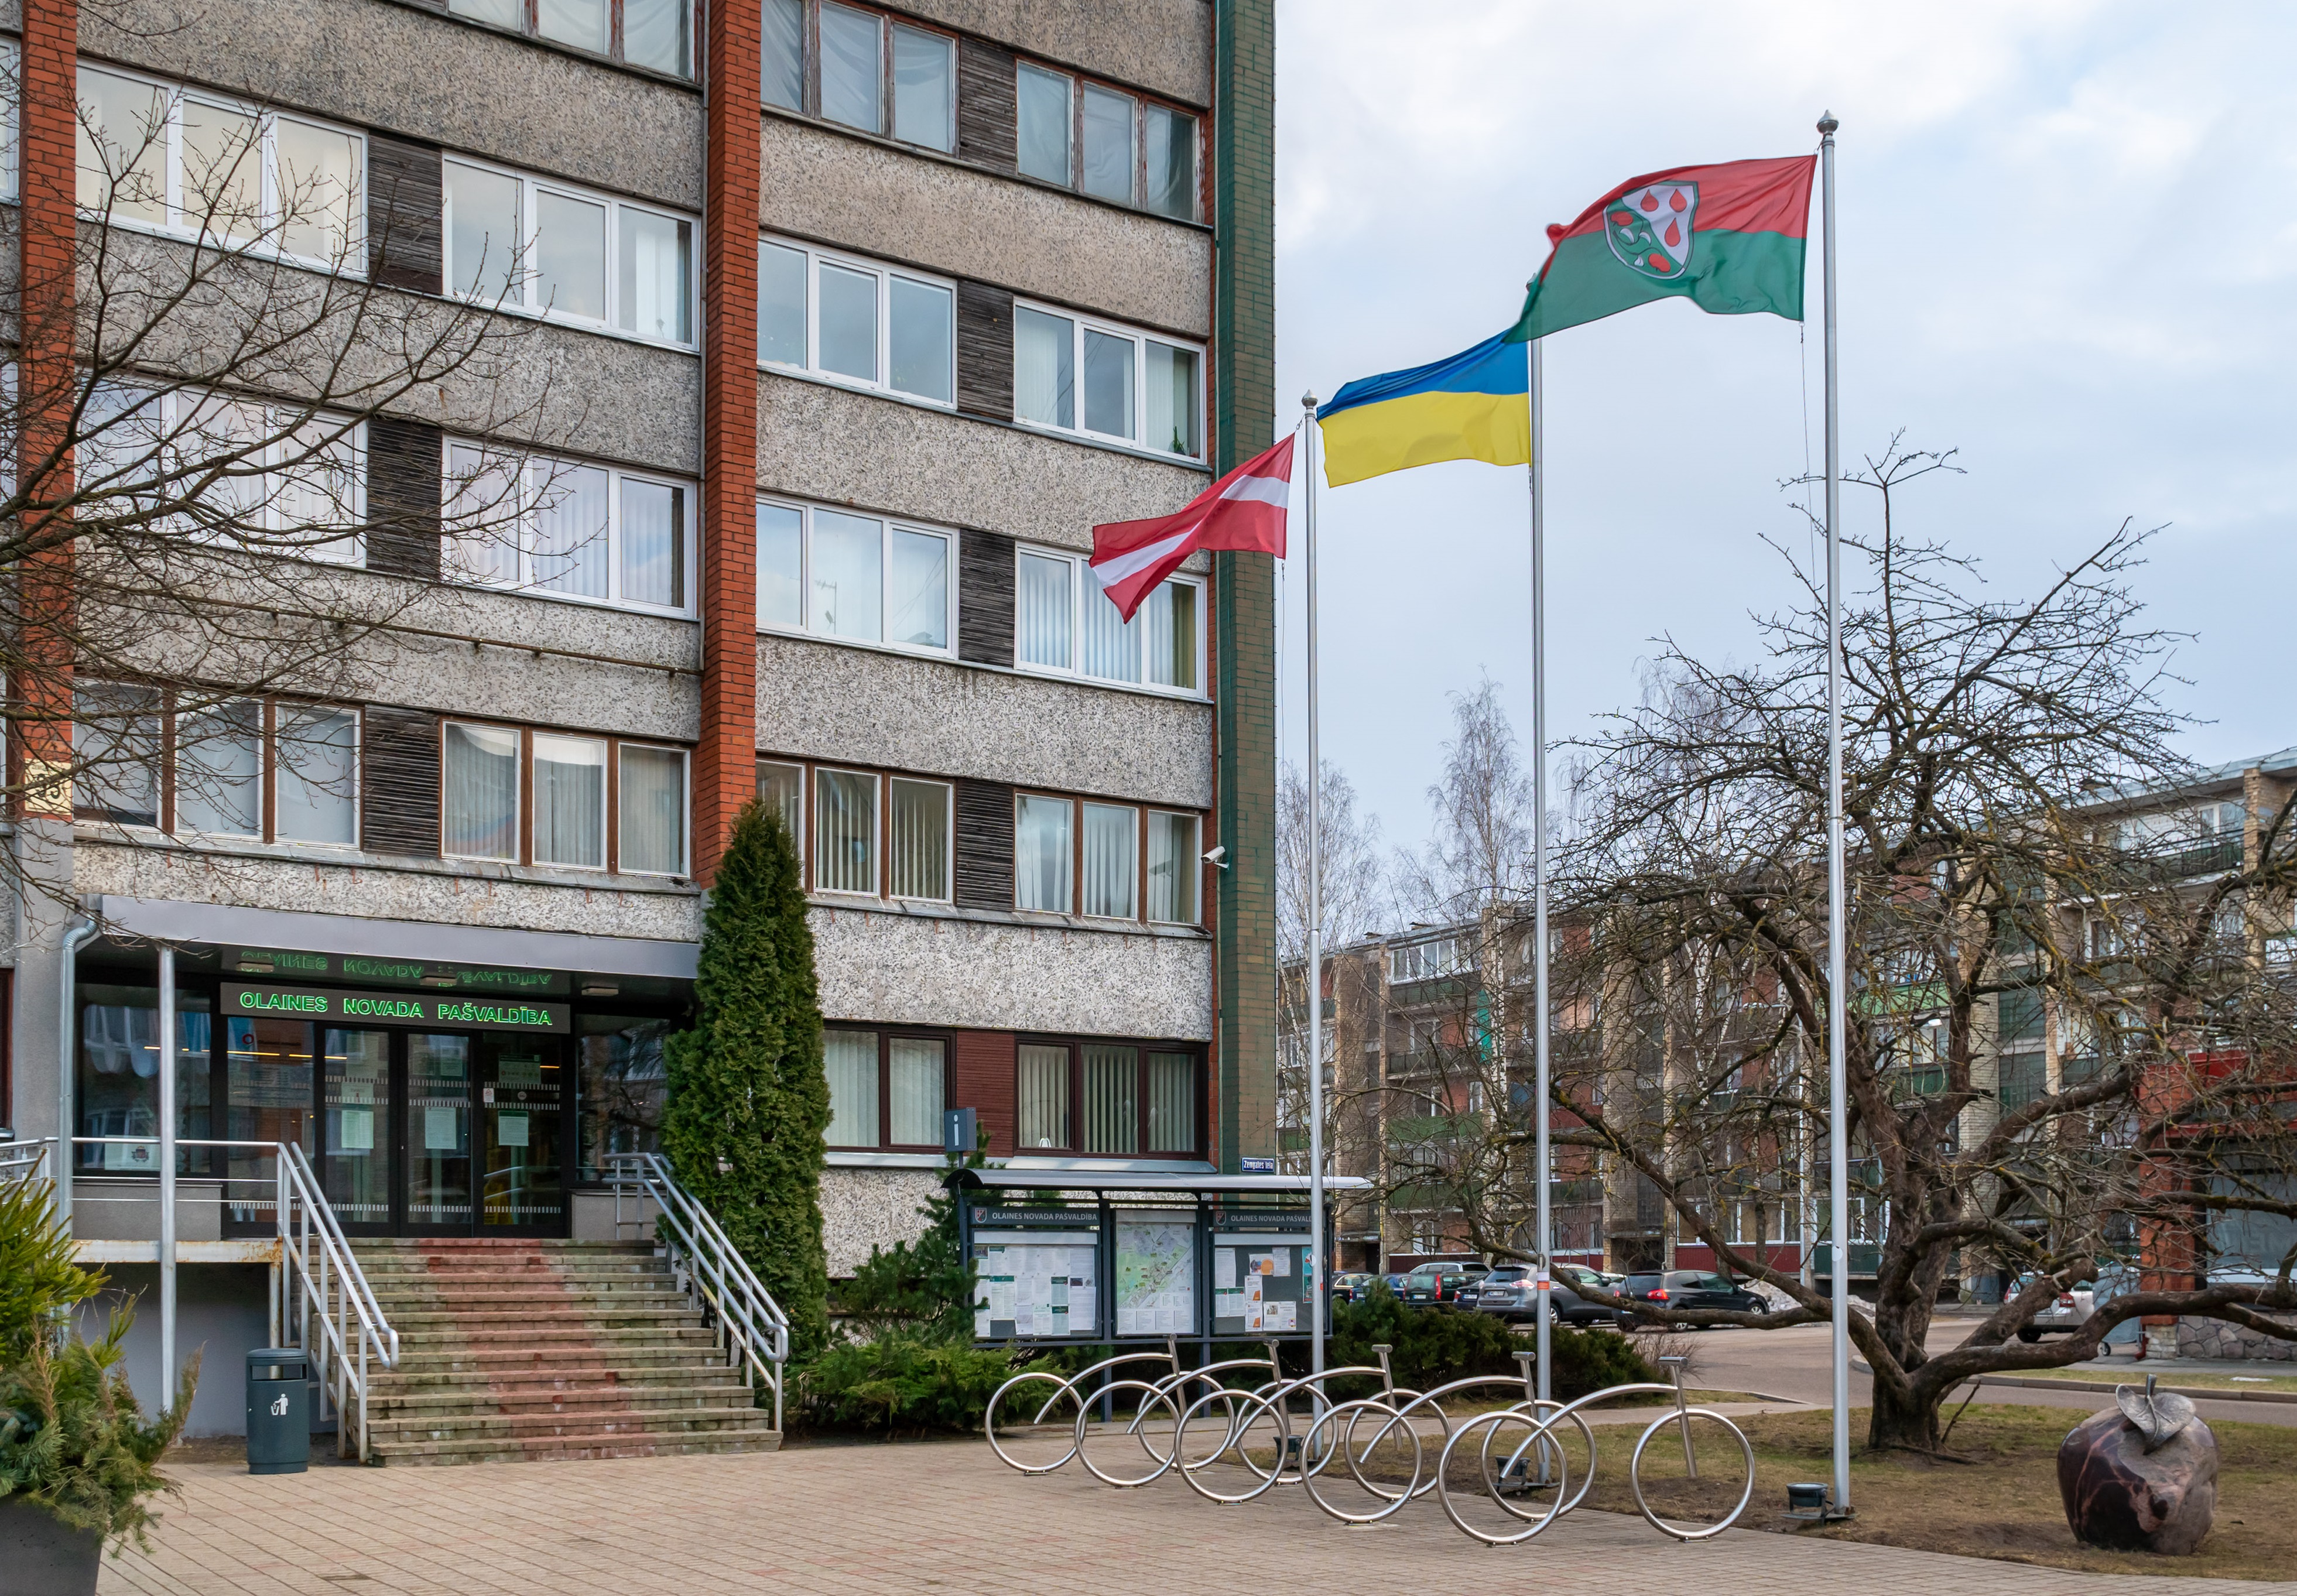 Karogu mastos pie pašvaldības ēkas  ir Latvijas, Ukrainas un Olaines novada karogi.